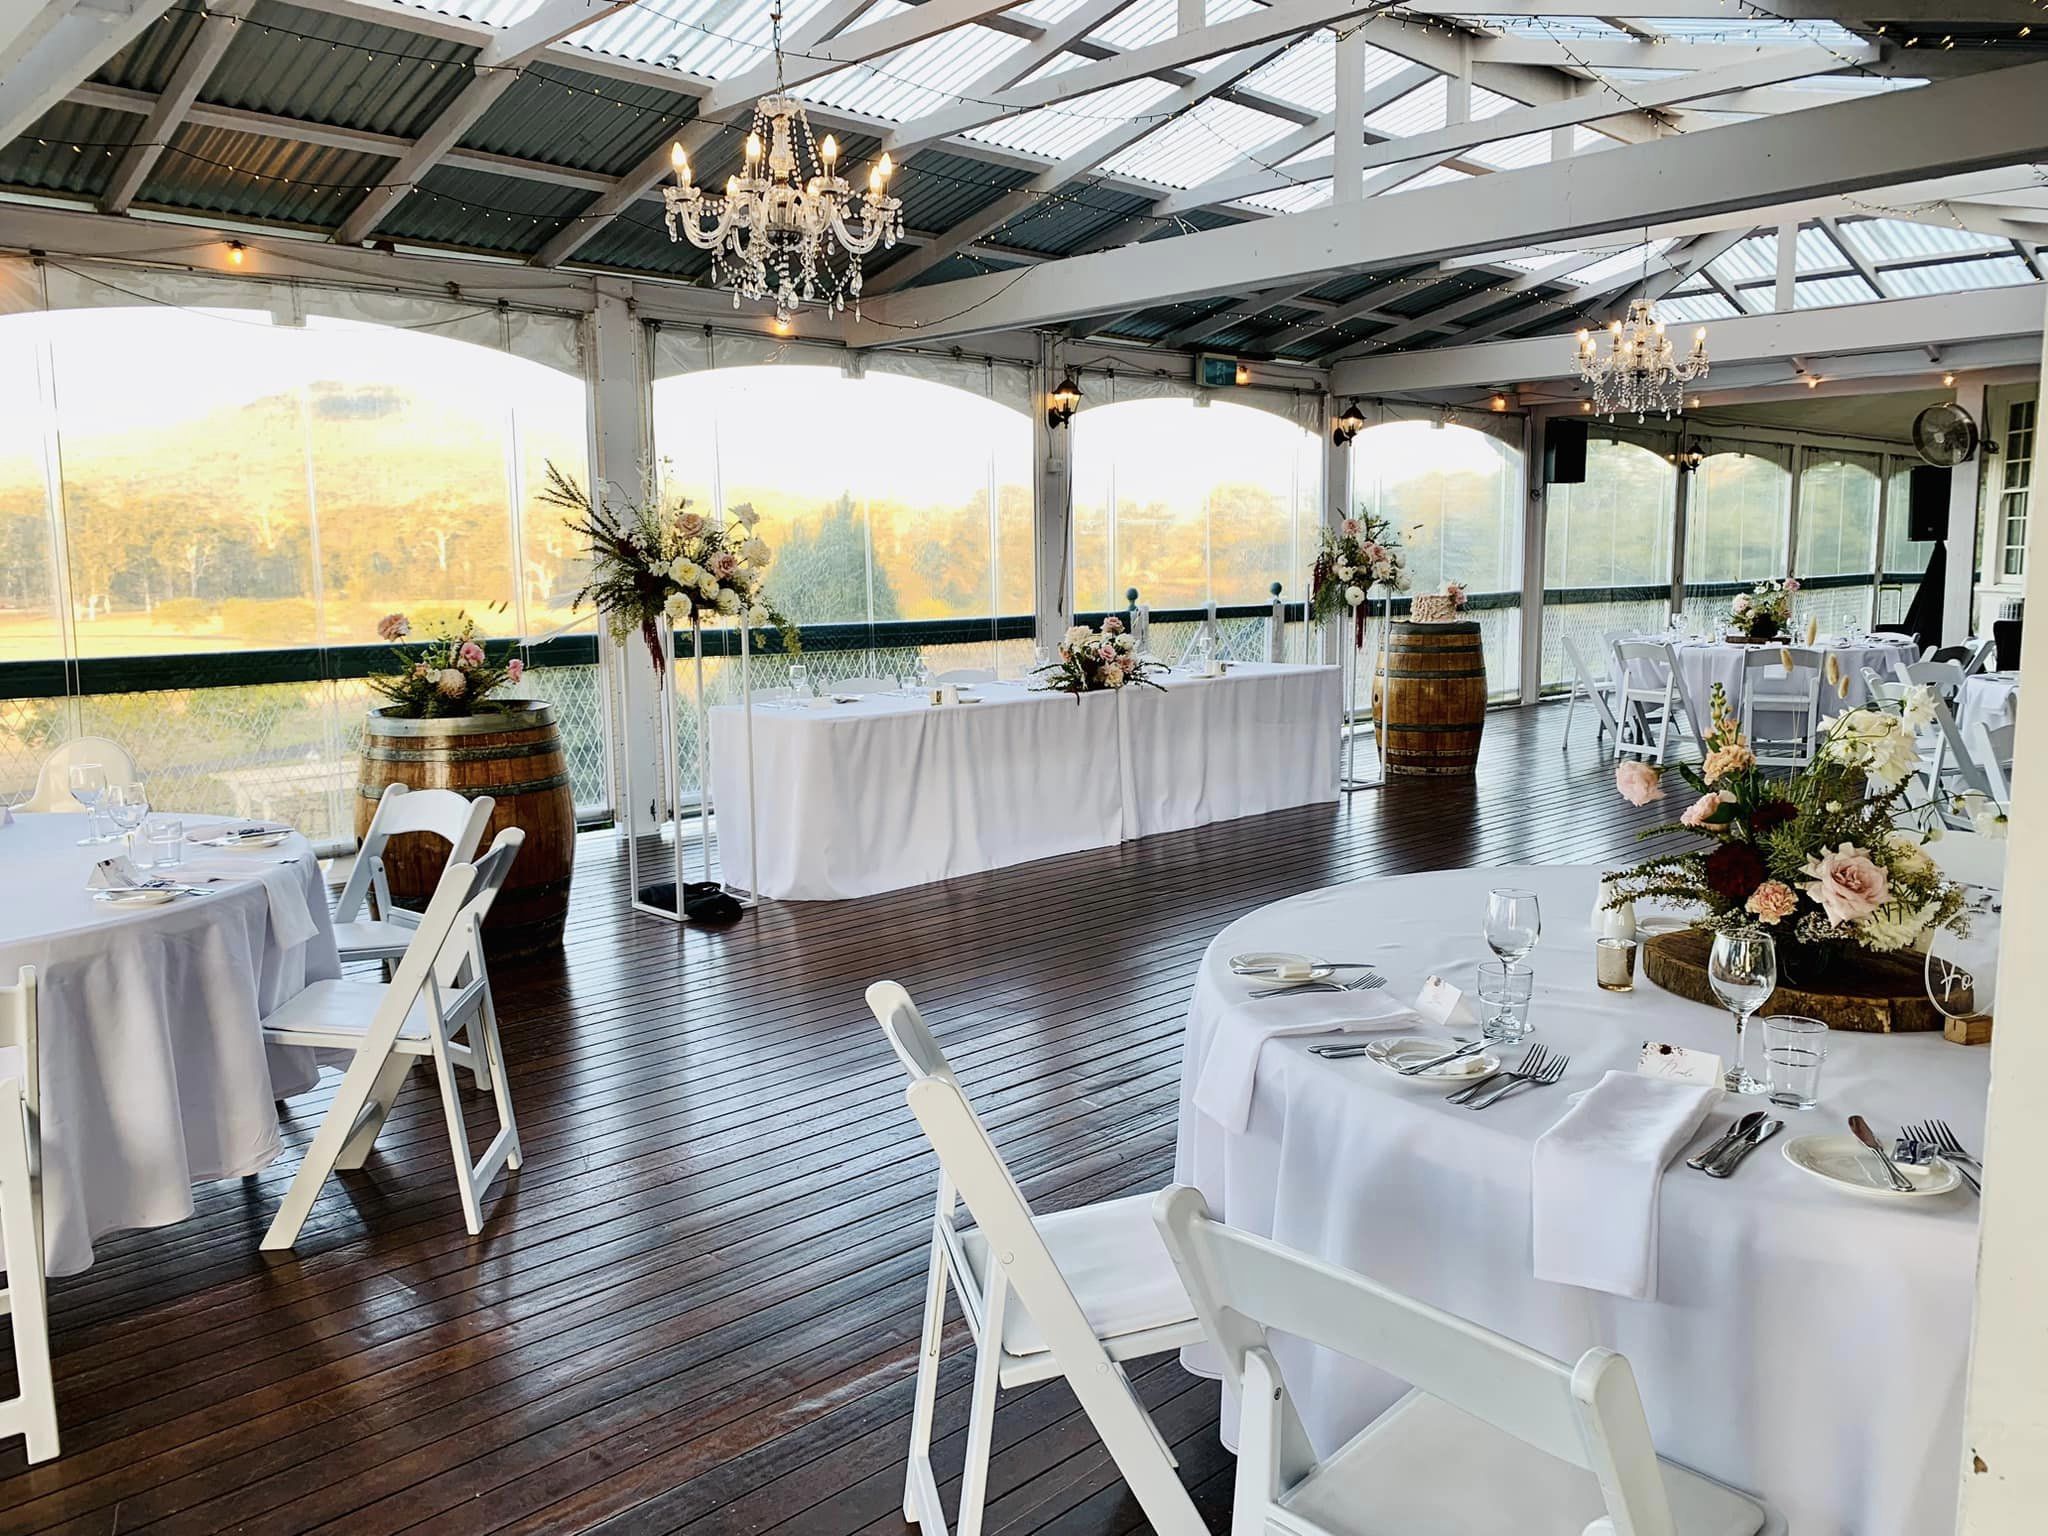 wedding tables on a verandah overlooking a vineyard at a wedding venue near brisbane